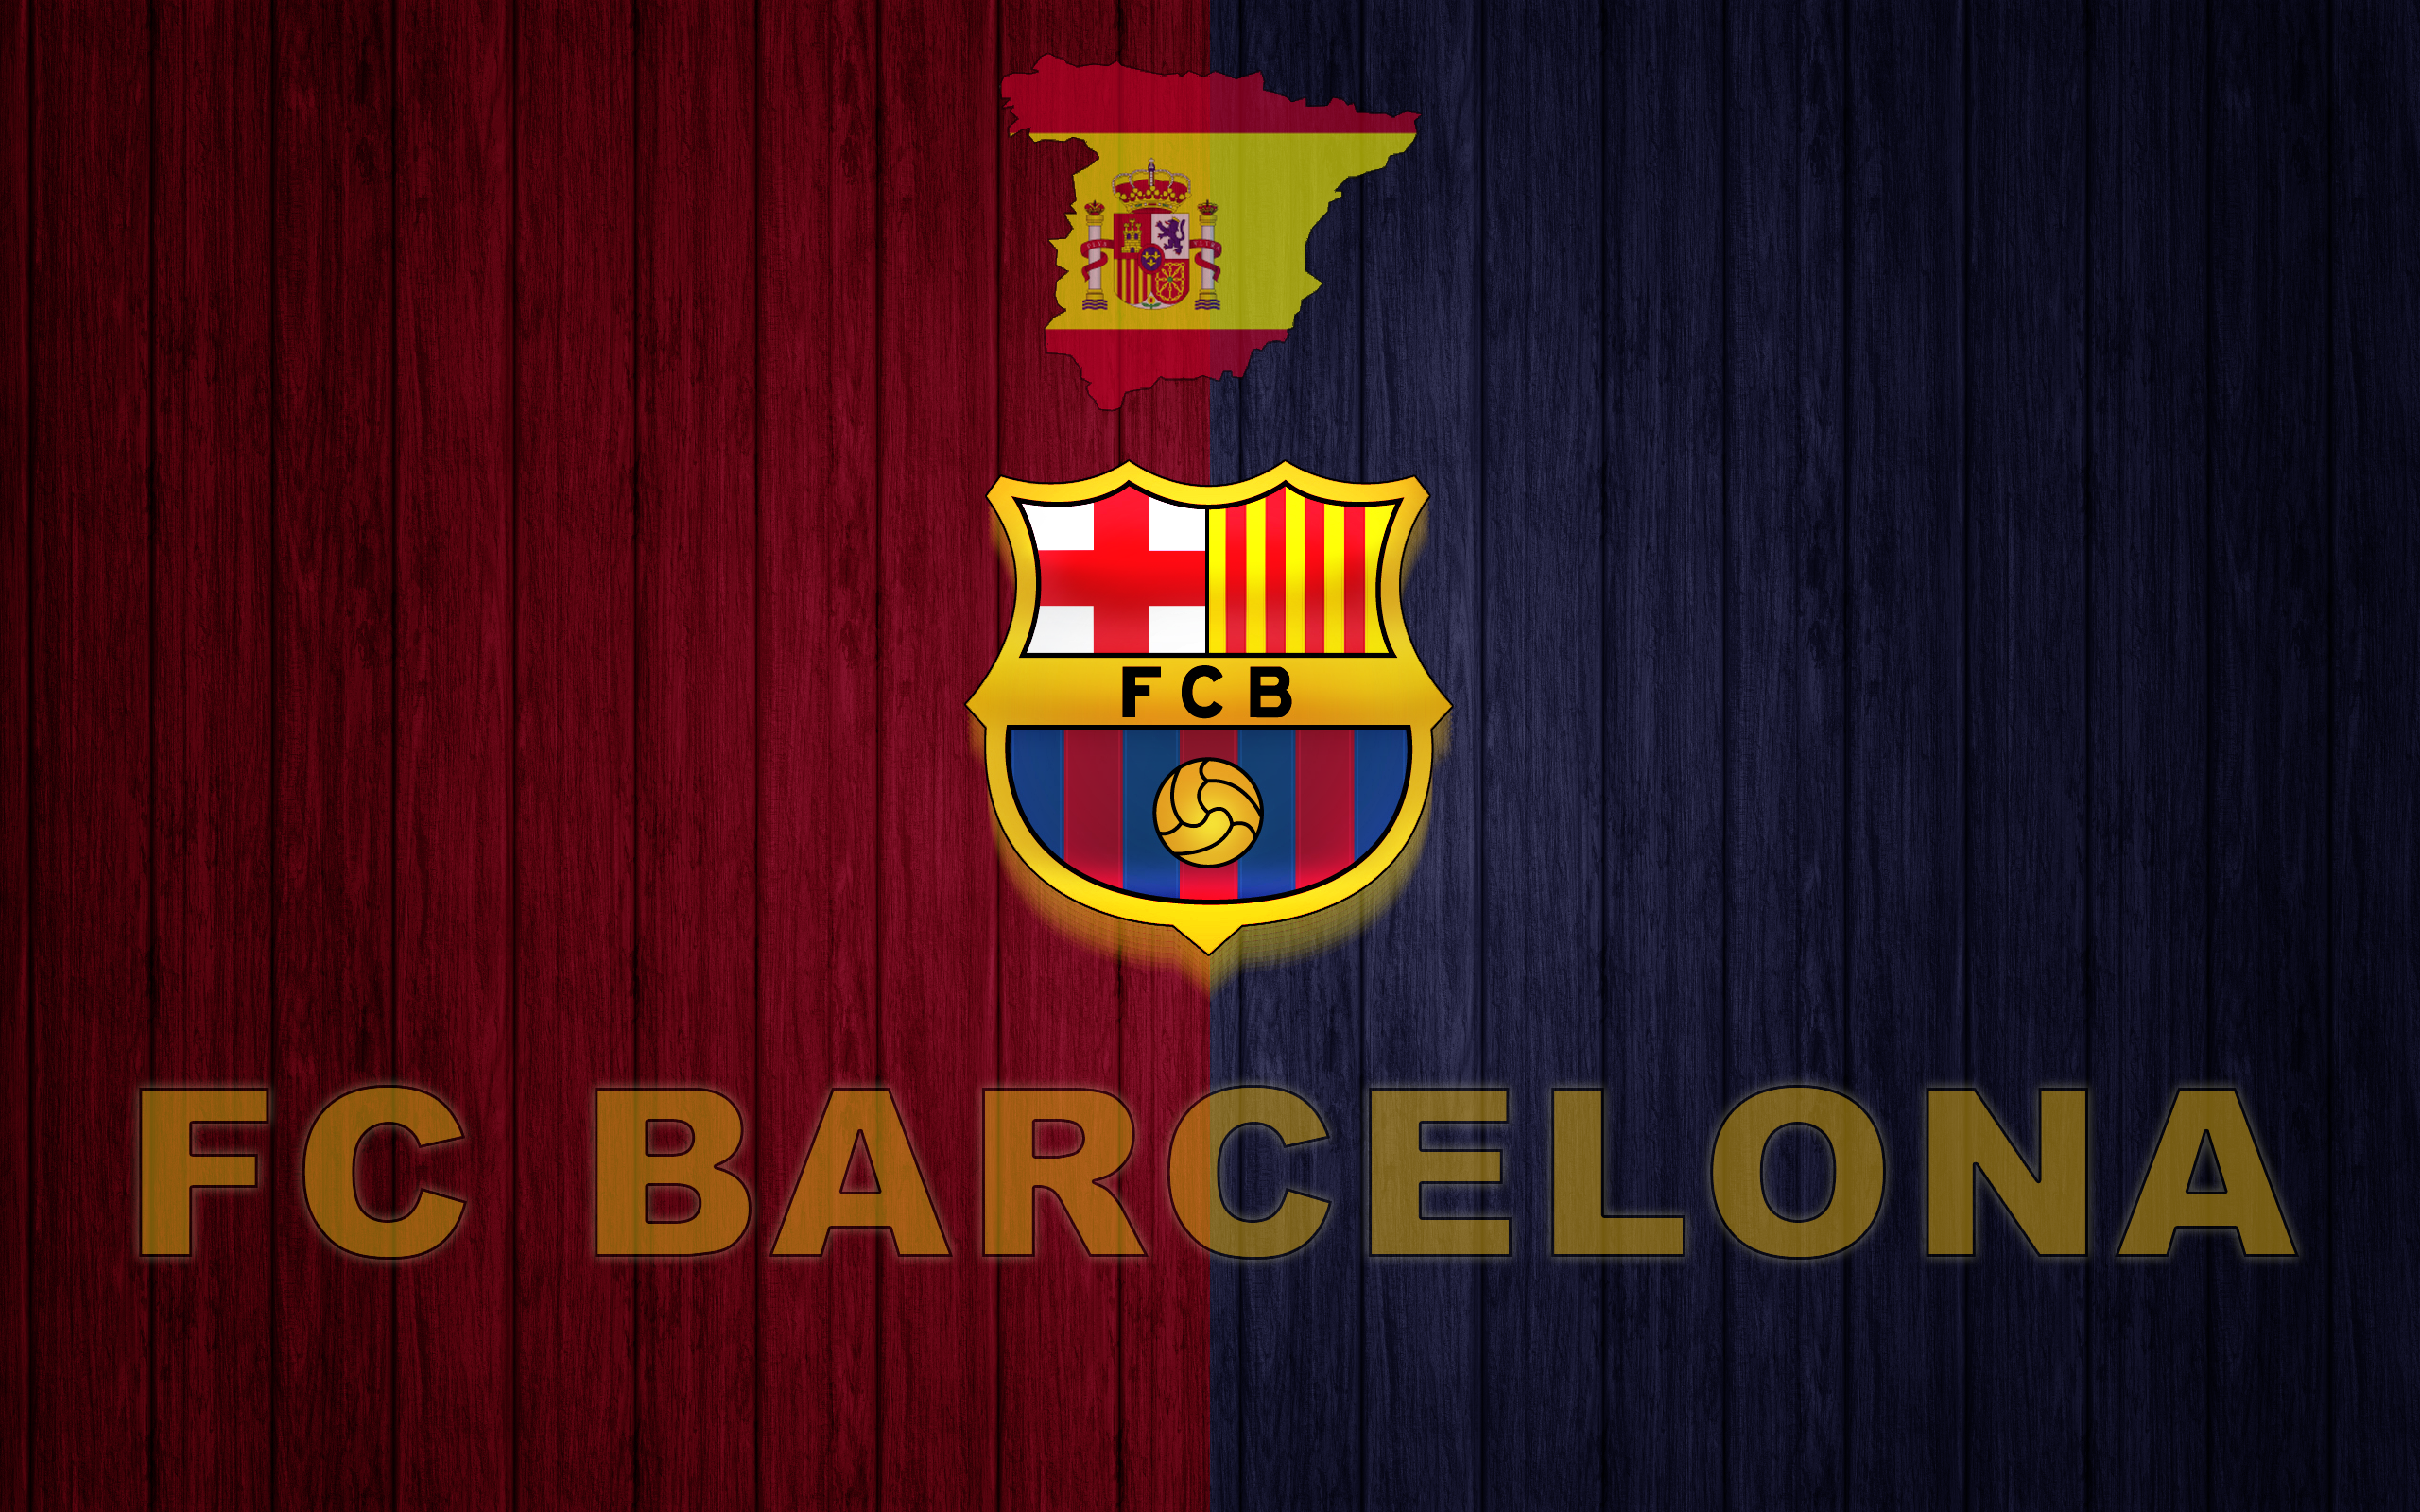 General 2560x1600 Barcelona FC Barcelona Spain soccer clubs soccer logo barca sport digital art